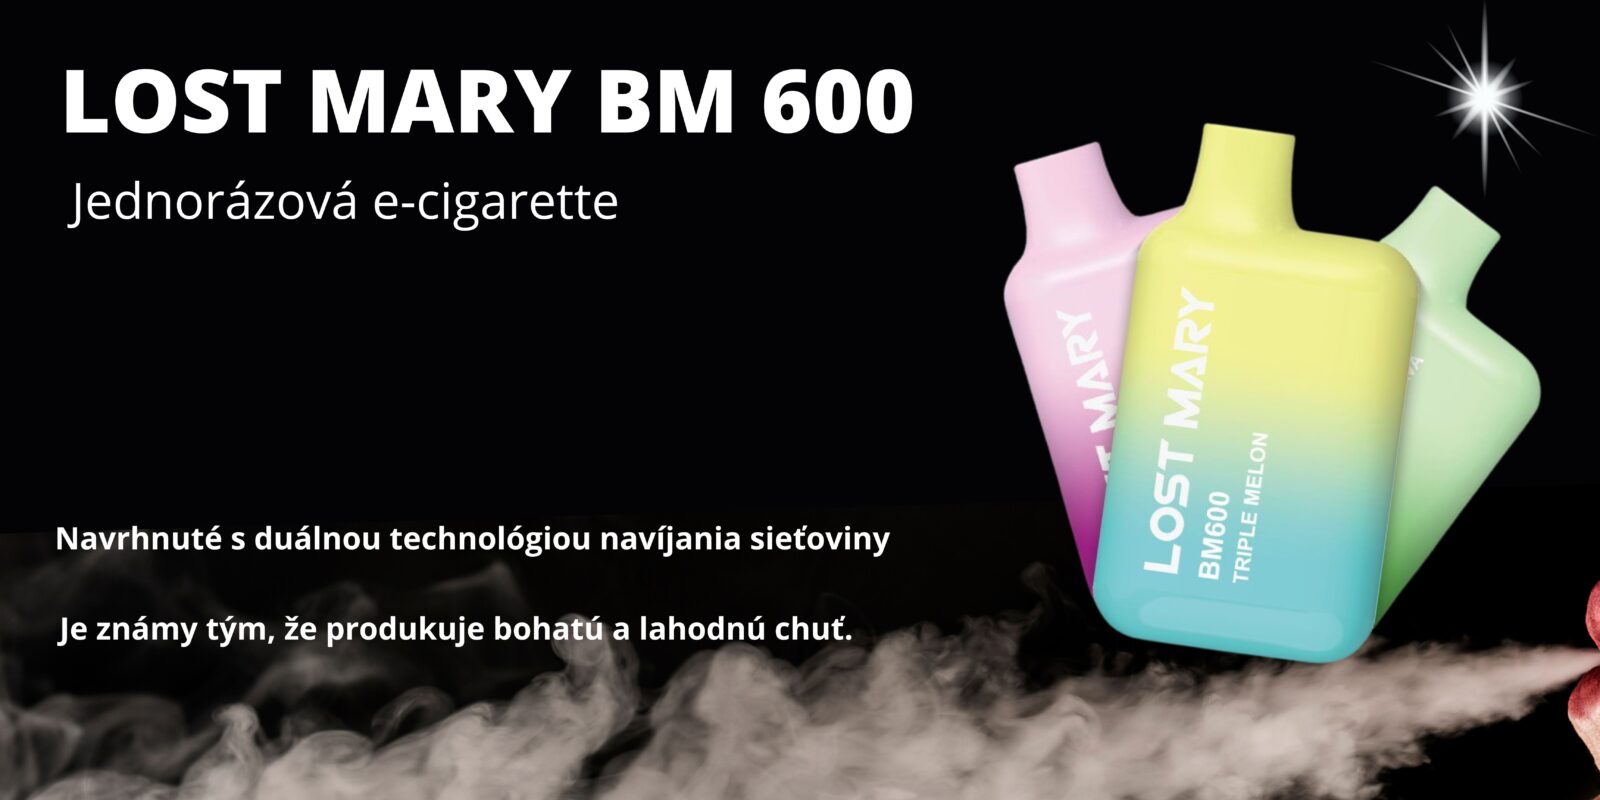 Lost Mary BM600 – Strawberry Ice (Jednorazová e-cigareta) 20MG JEDNORAZOVÉ E-CIGARETY - XMANIA Ireland 14